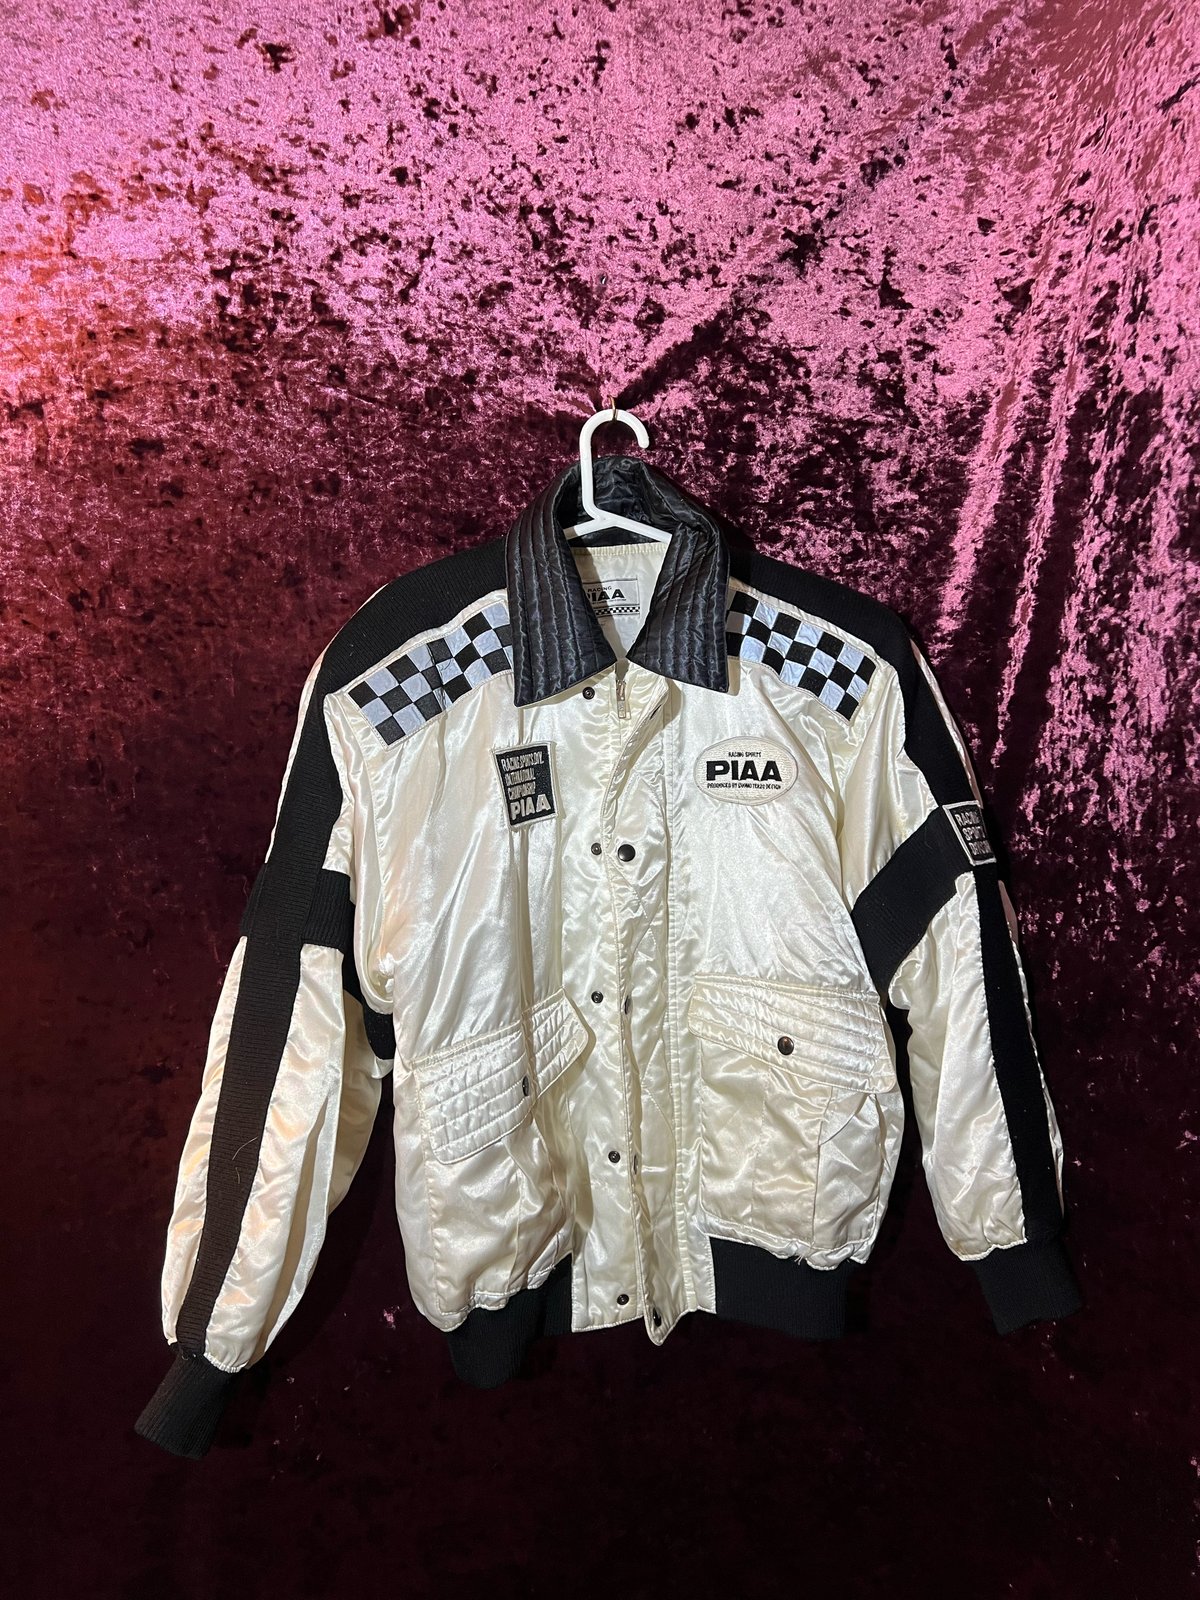 PIAA Motorsport racing jacket | Annoying Team Racing!